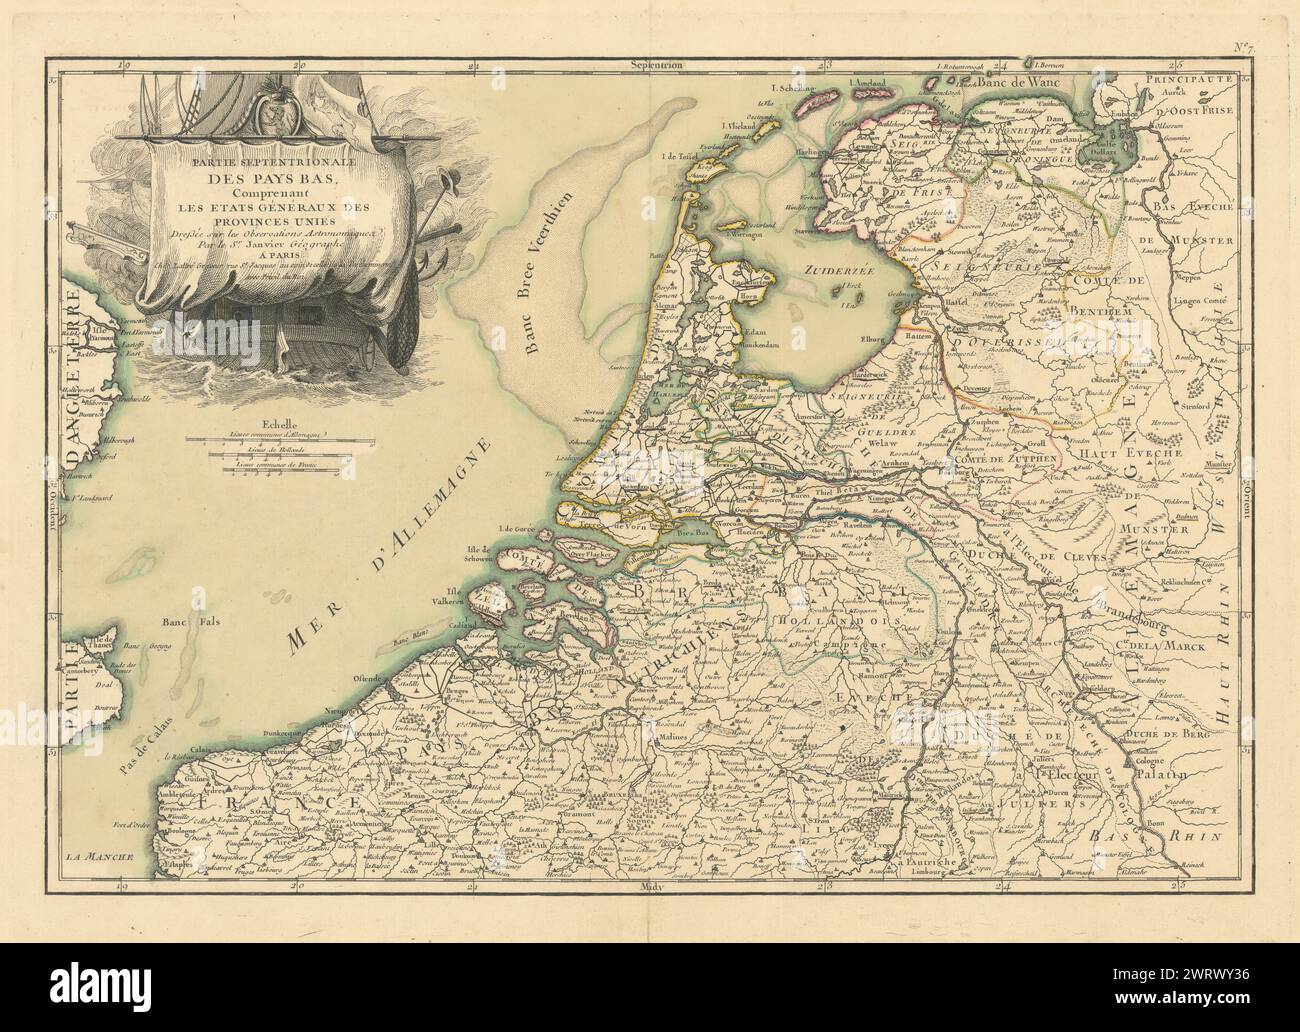 'Partie Septentrionale des Pays Bas'. Netherlands. Jean Janvier c1762 old map Stock Photo